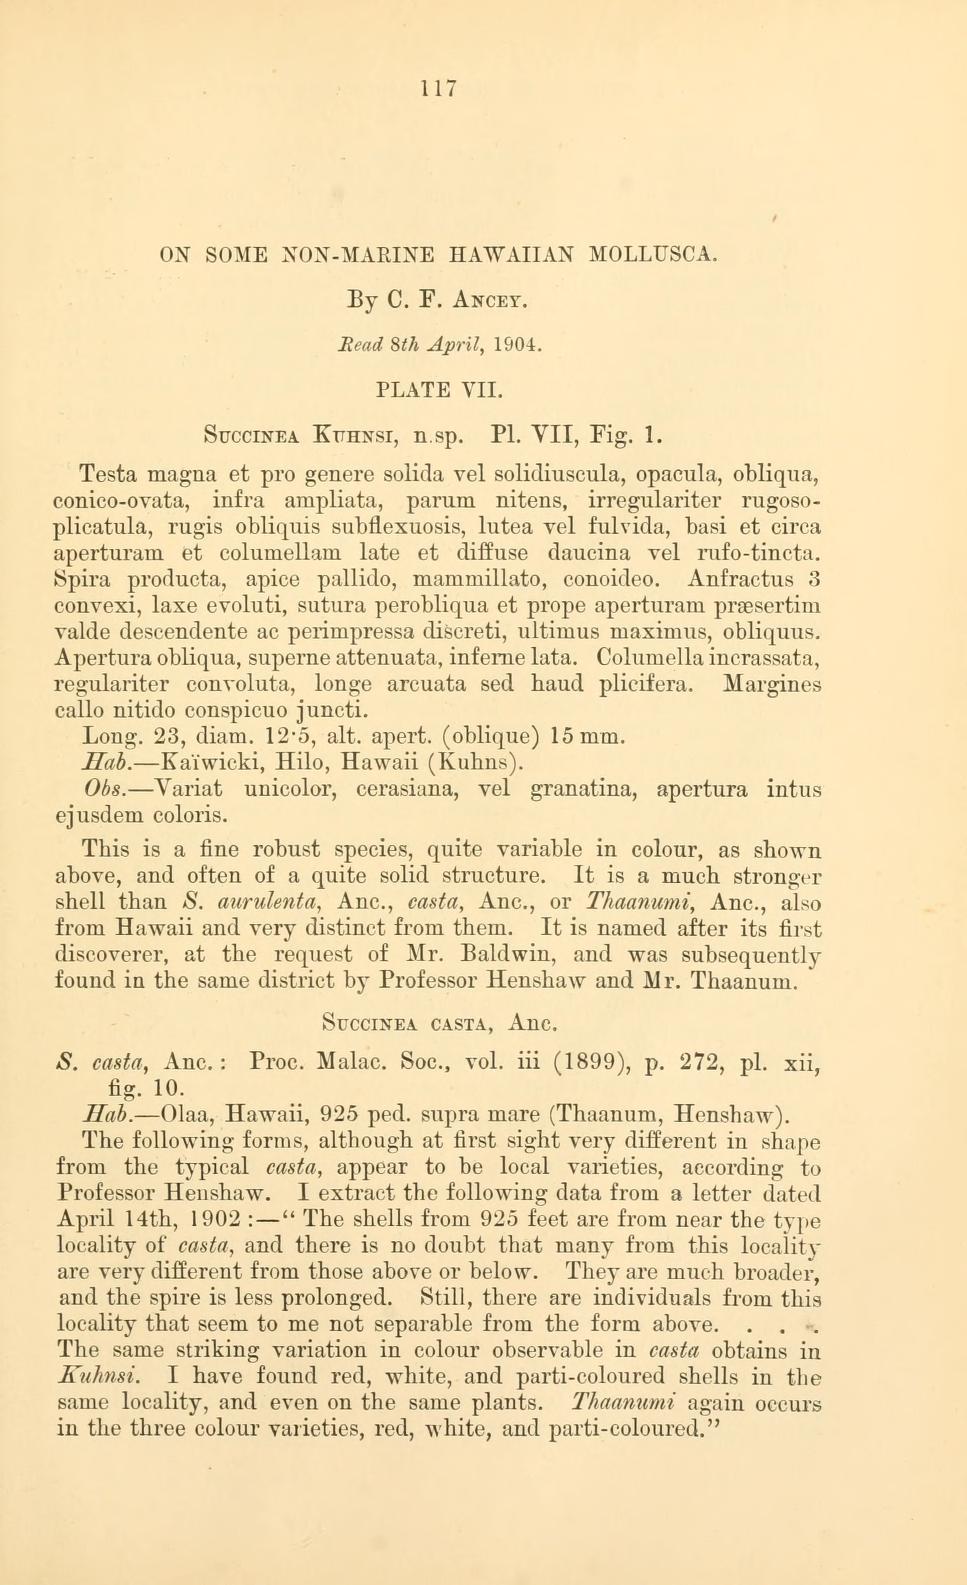 Media type: text, Ancey 1904. Description: article